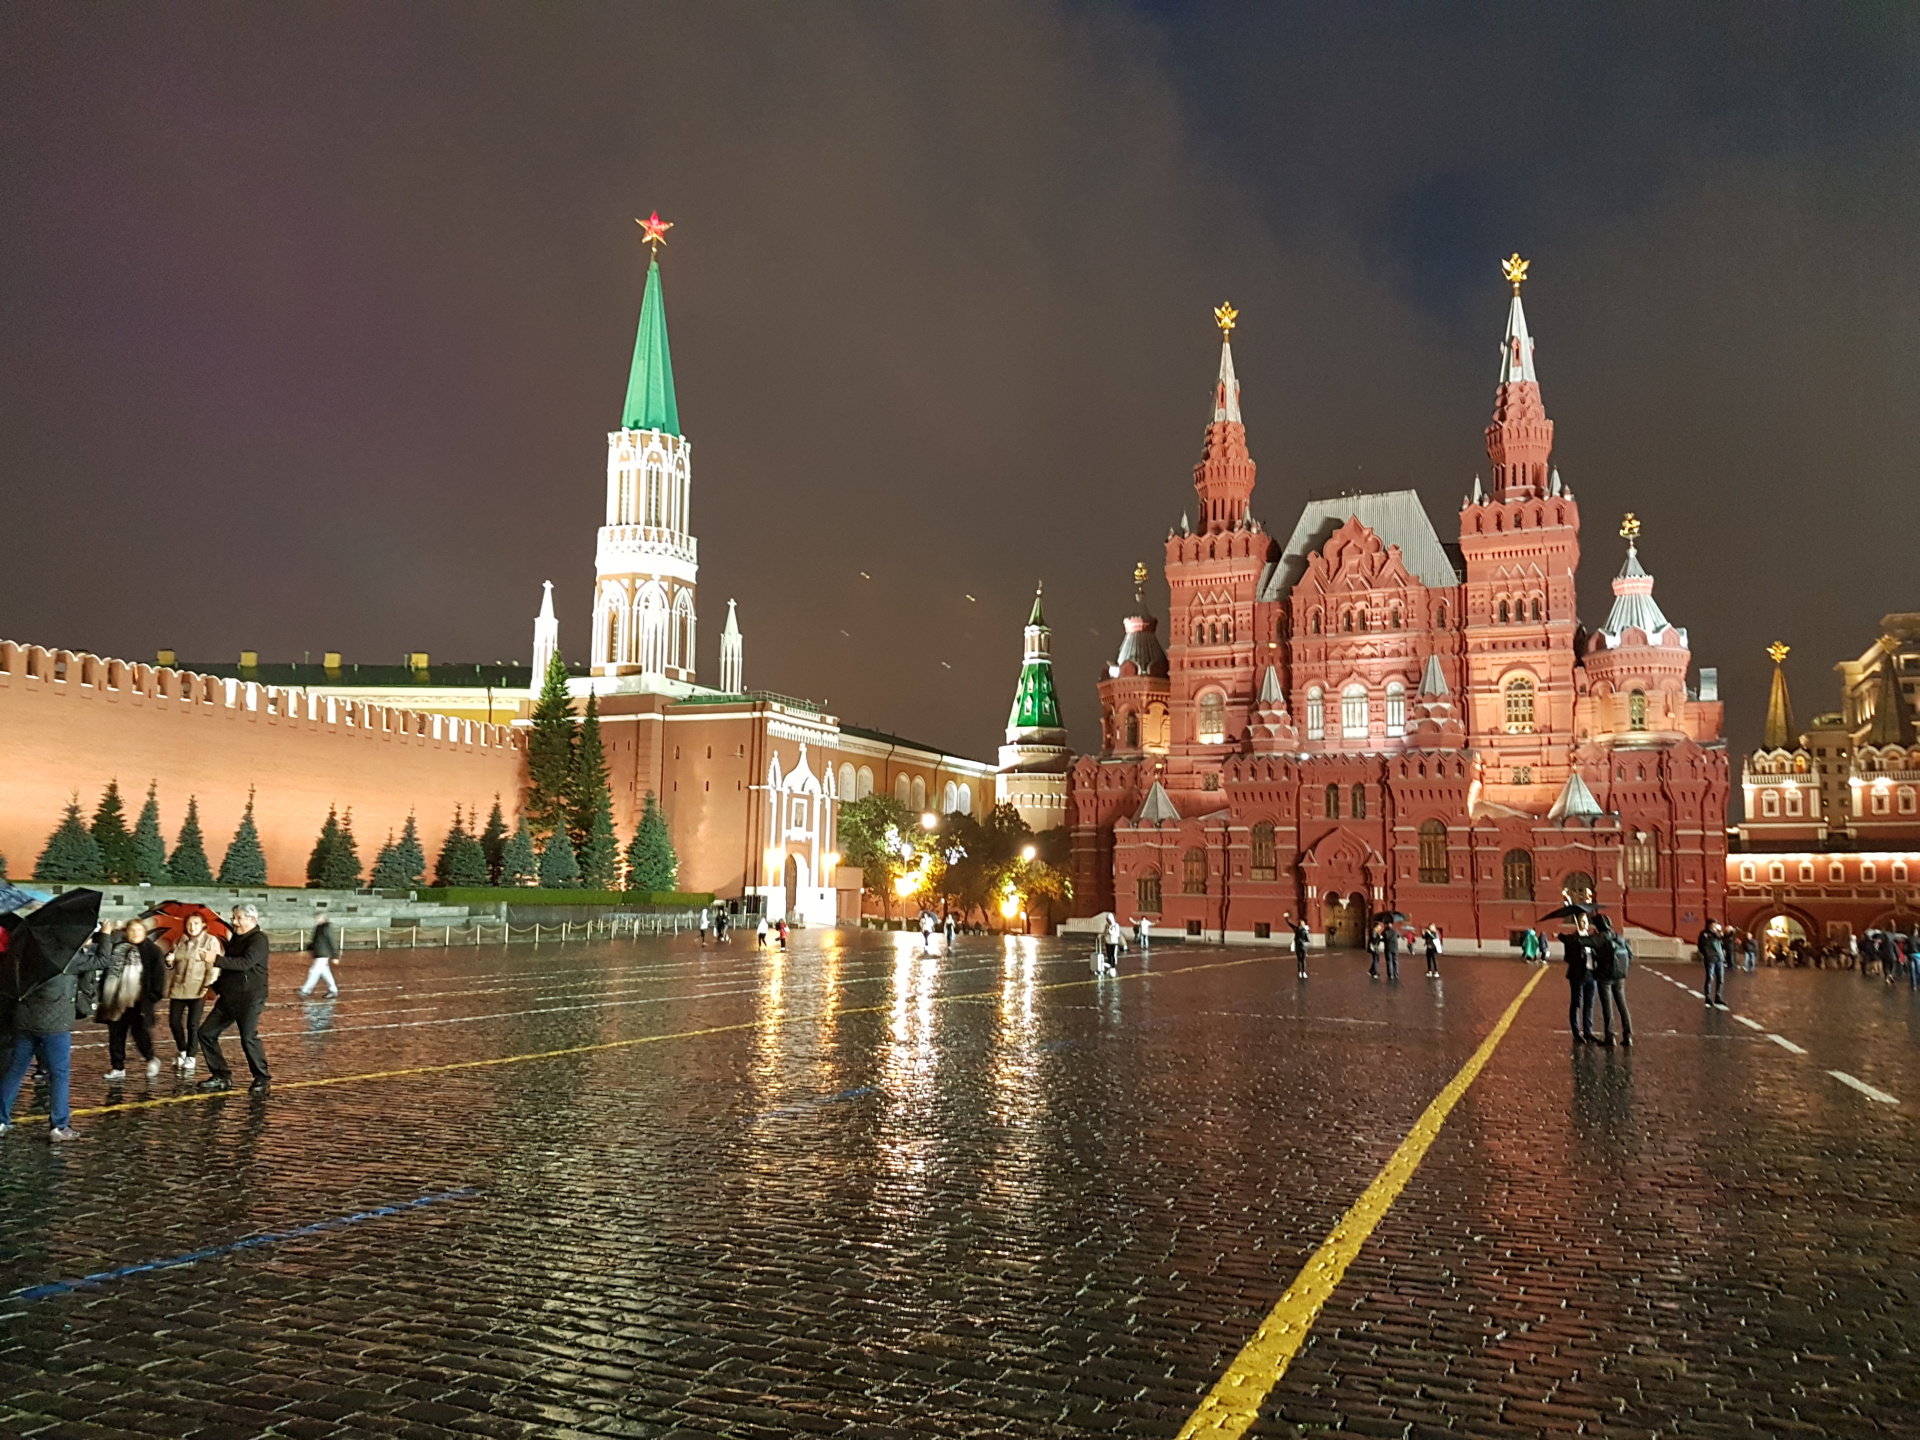 20170707-221457-Moscow-Kreml-Red_Square-SJ.jpg